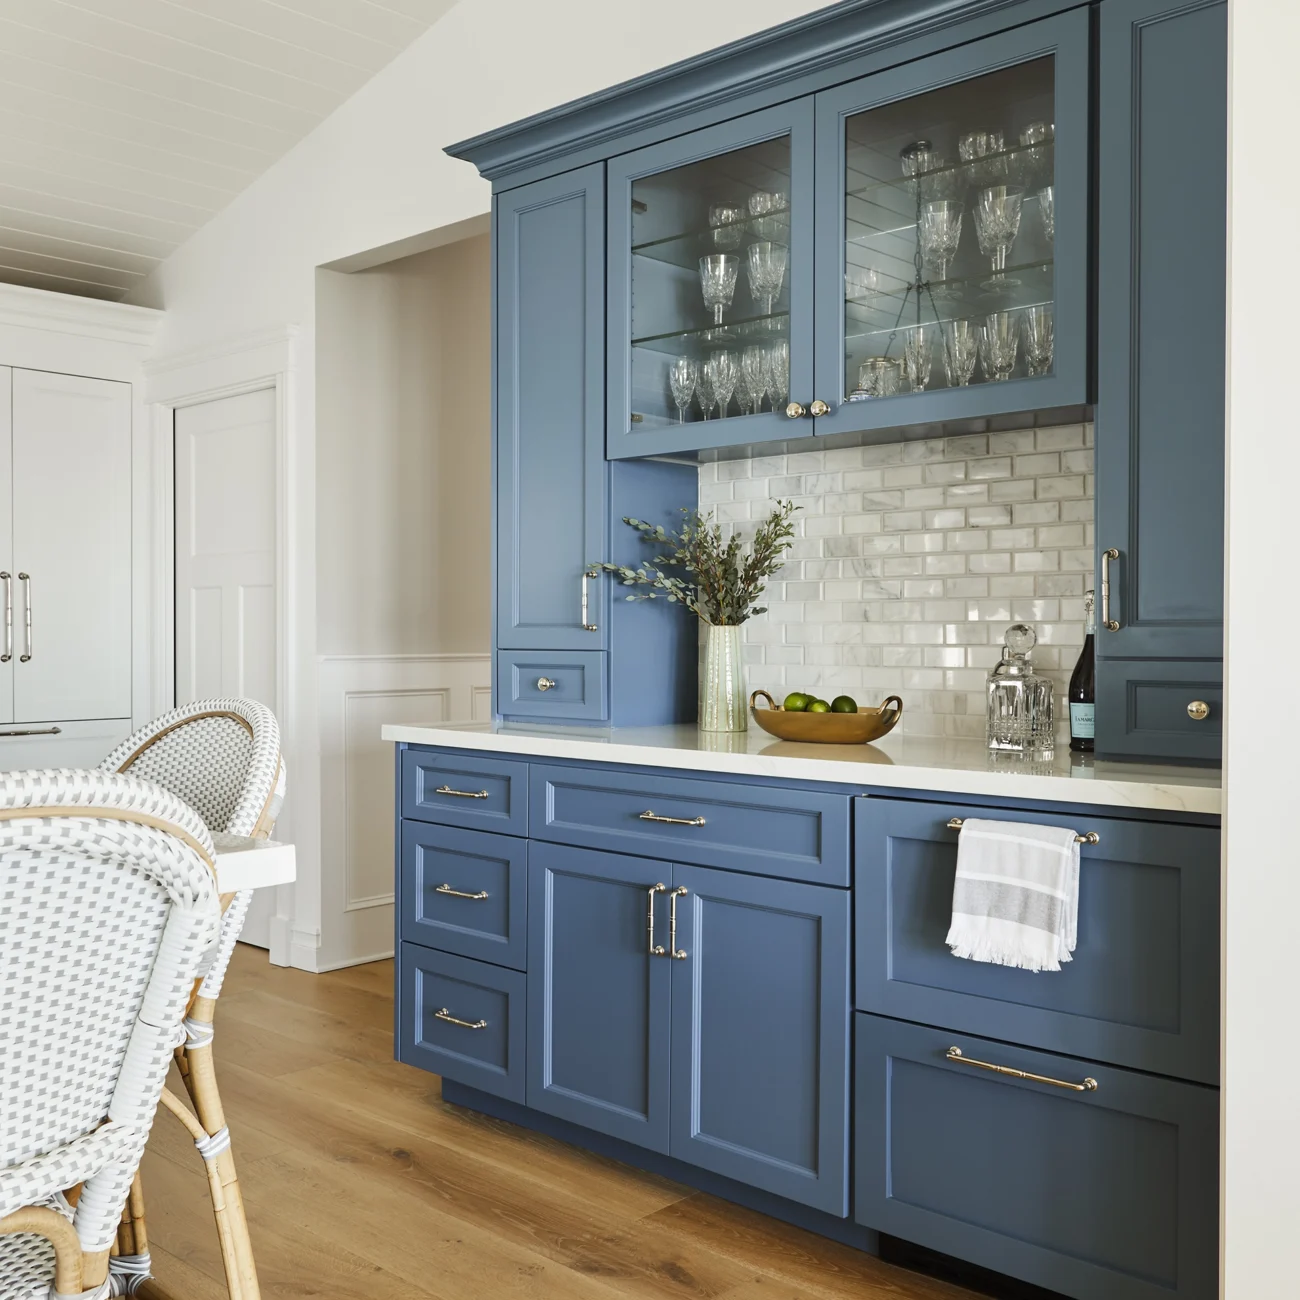 Christine Vroom Interiors Vigilance | Kitchen with hardwood floors and blue cabinets